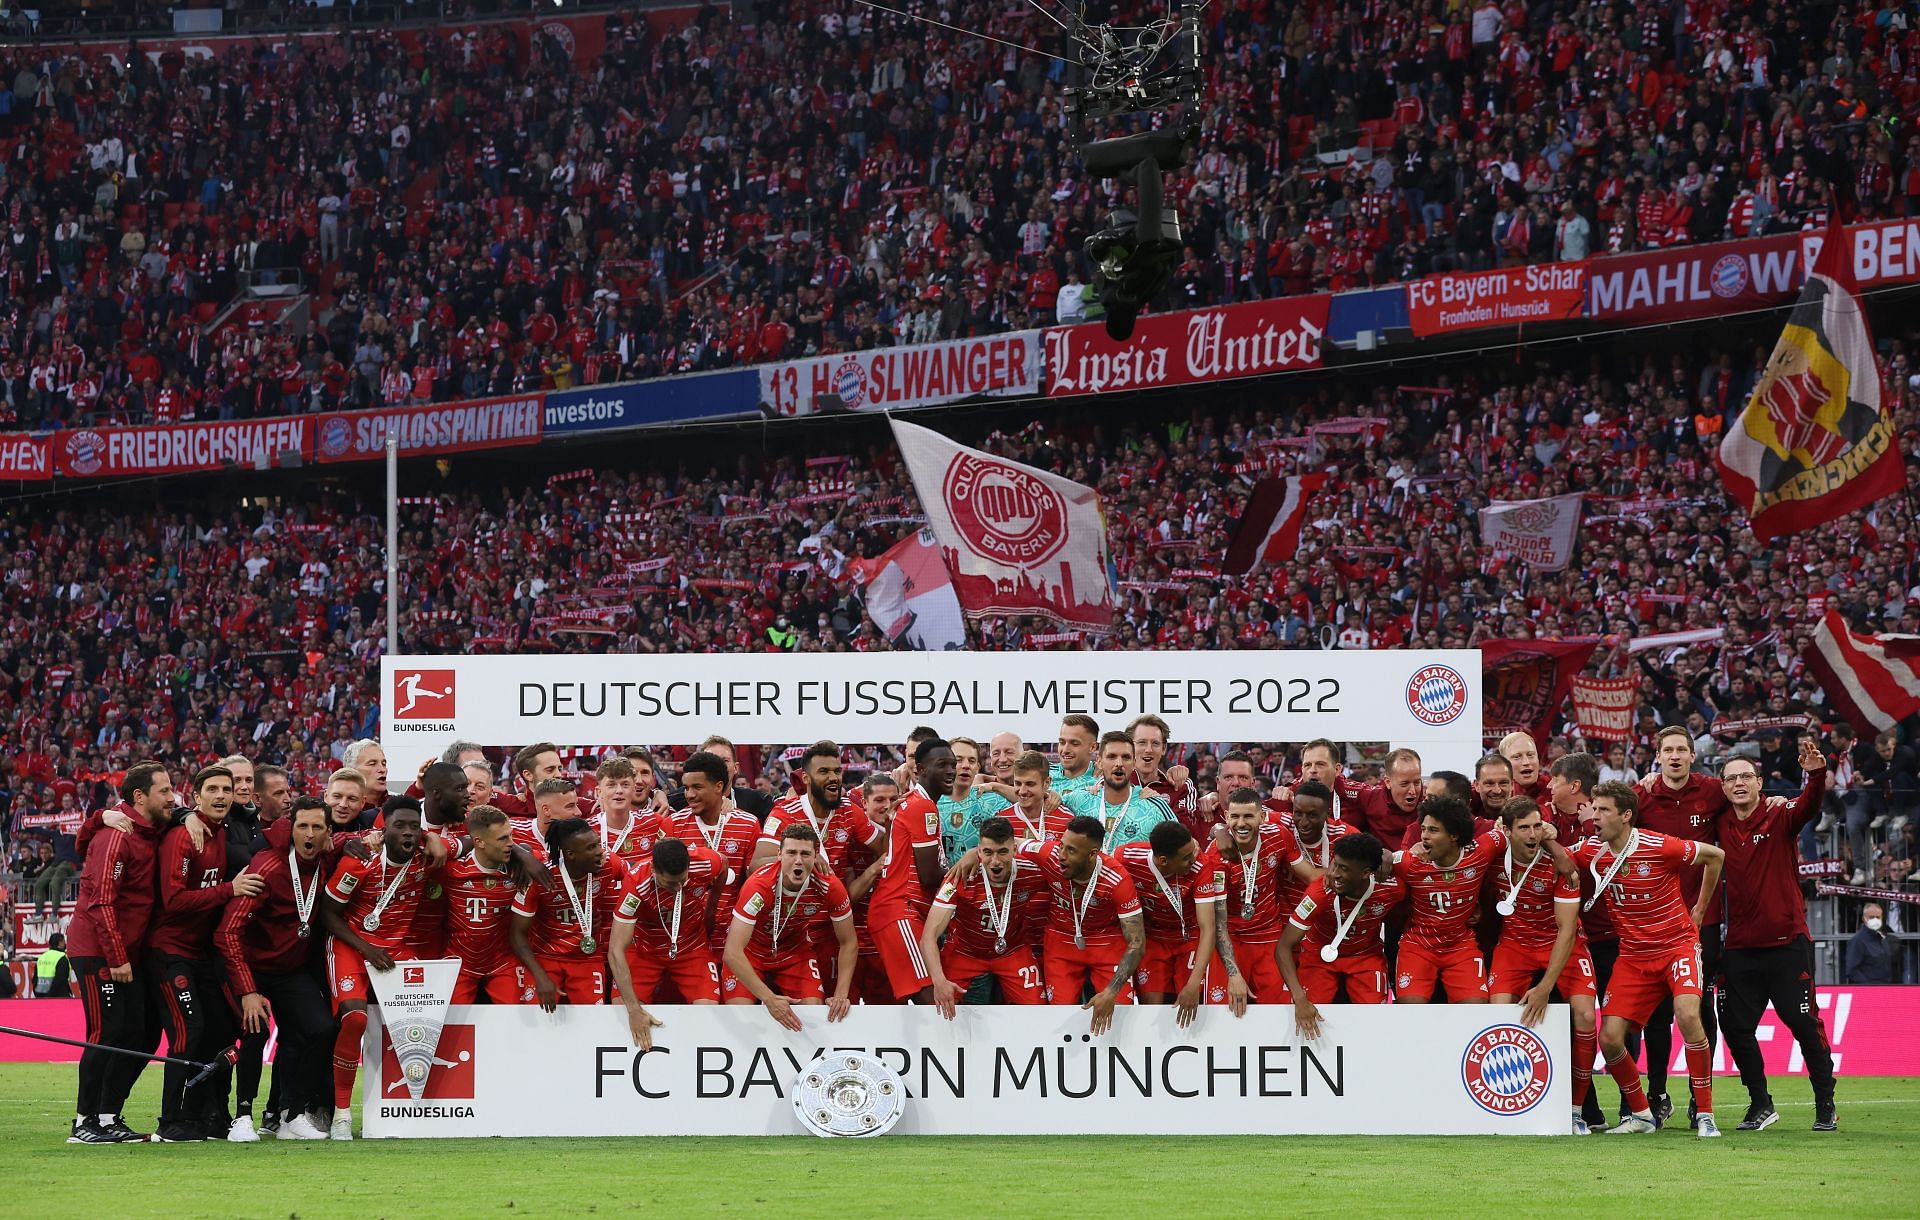 FC Bayern M&uuml;nchen also had a much better xG